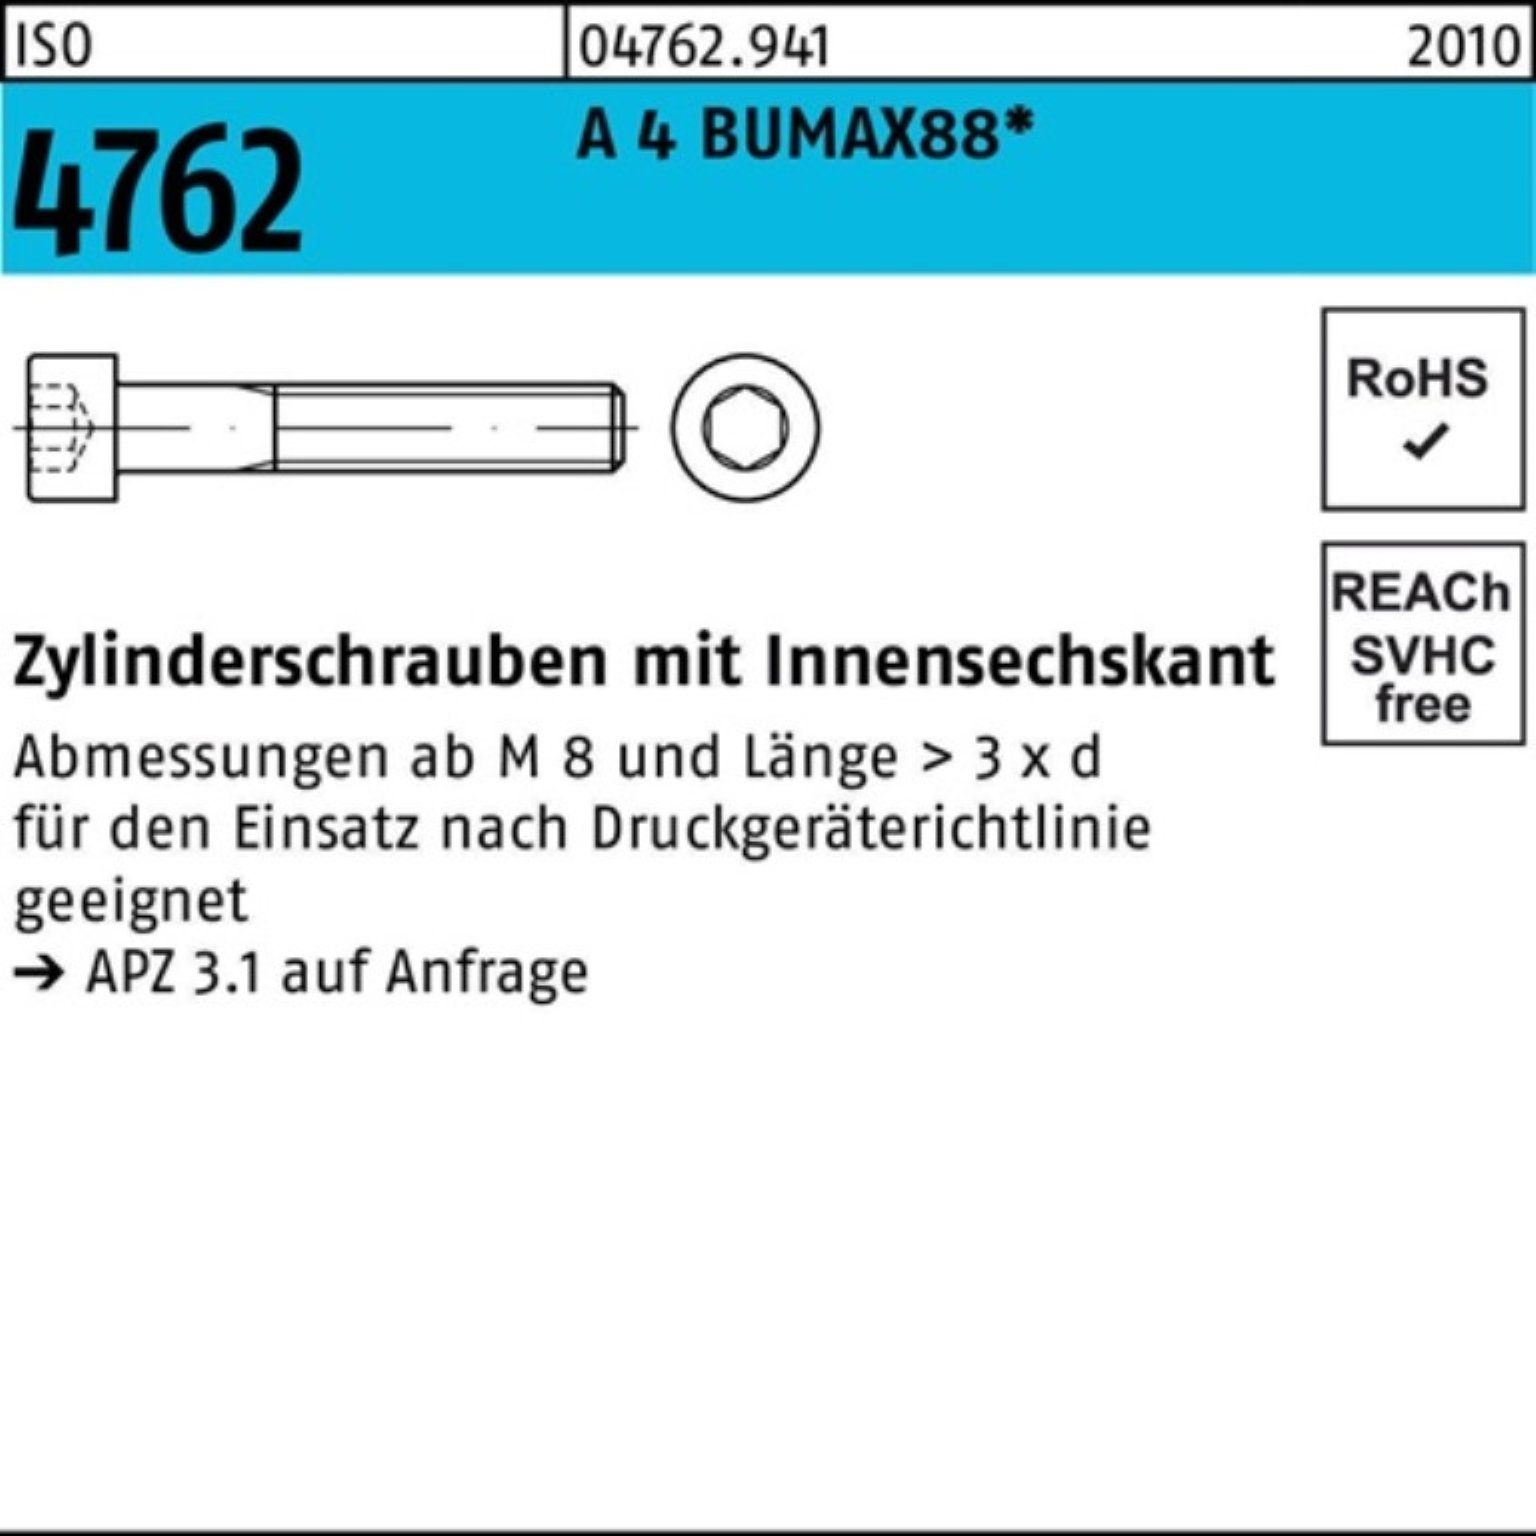 100er Zylinderschraube Pack Zylinderschraube A M10x BUMAX88 4 20 ISO 4762 Bufab 50 Innen-6kt